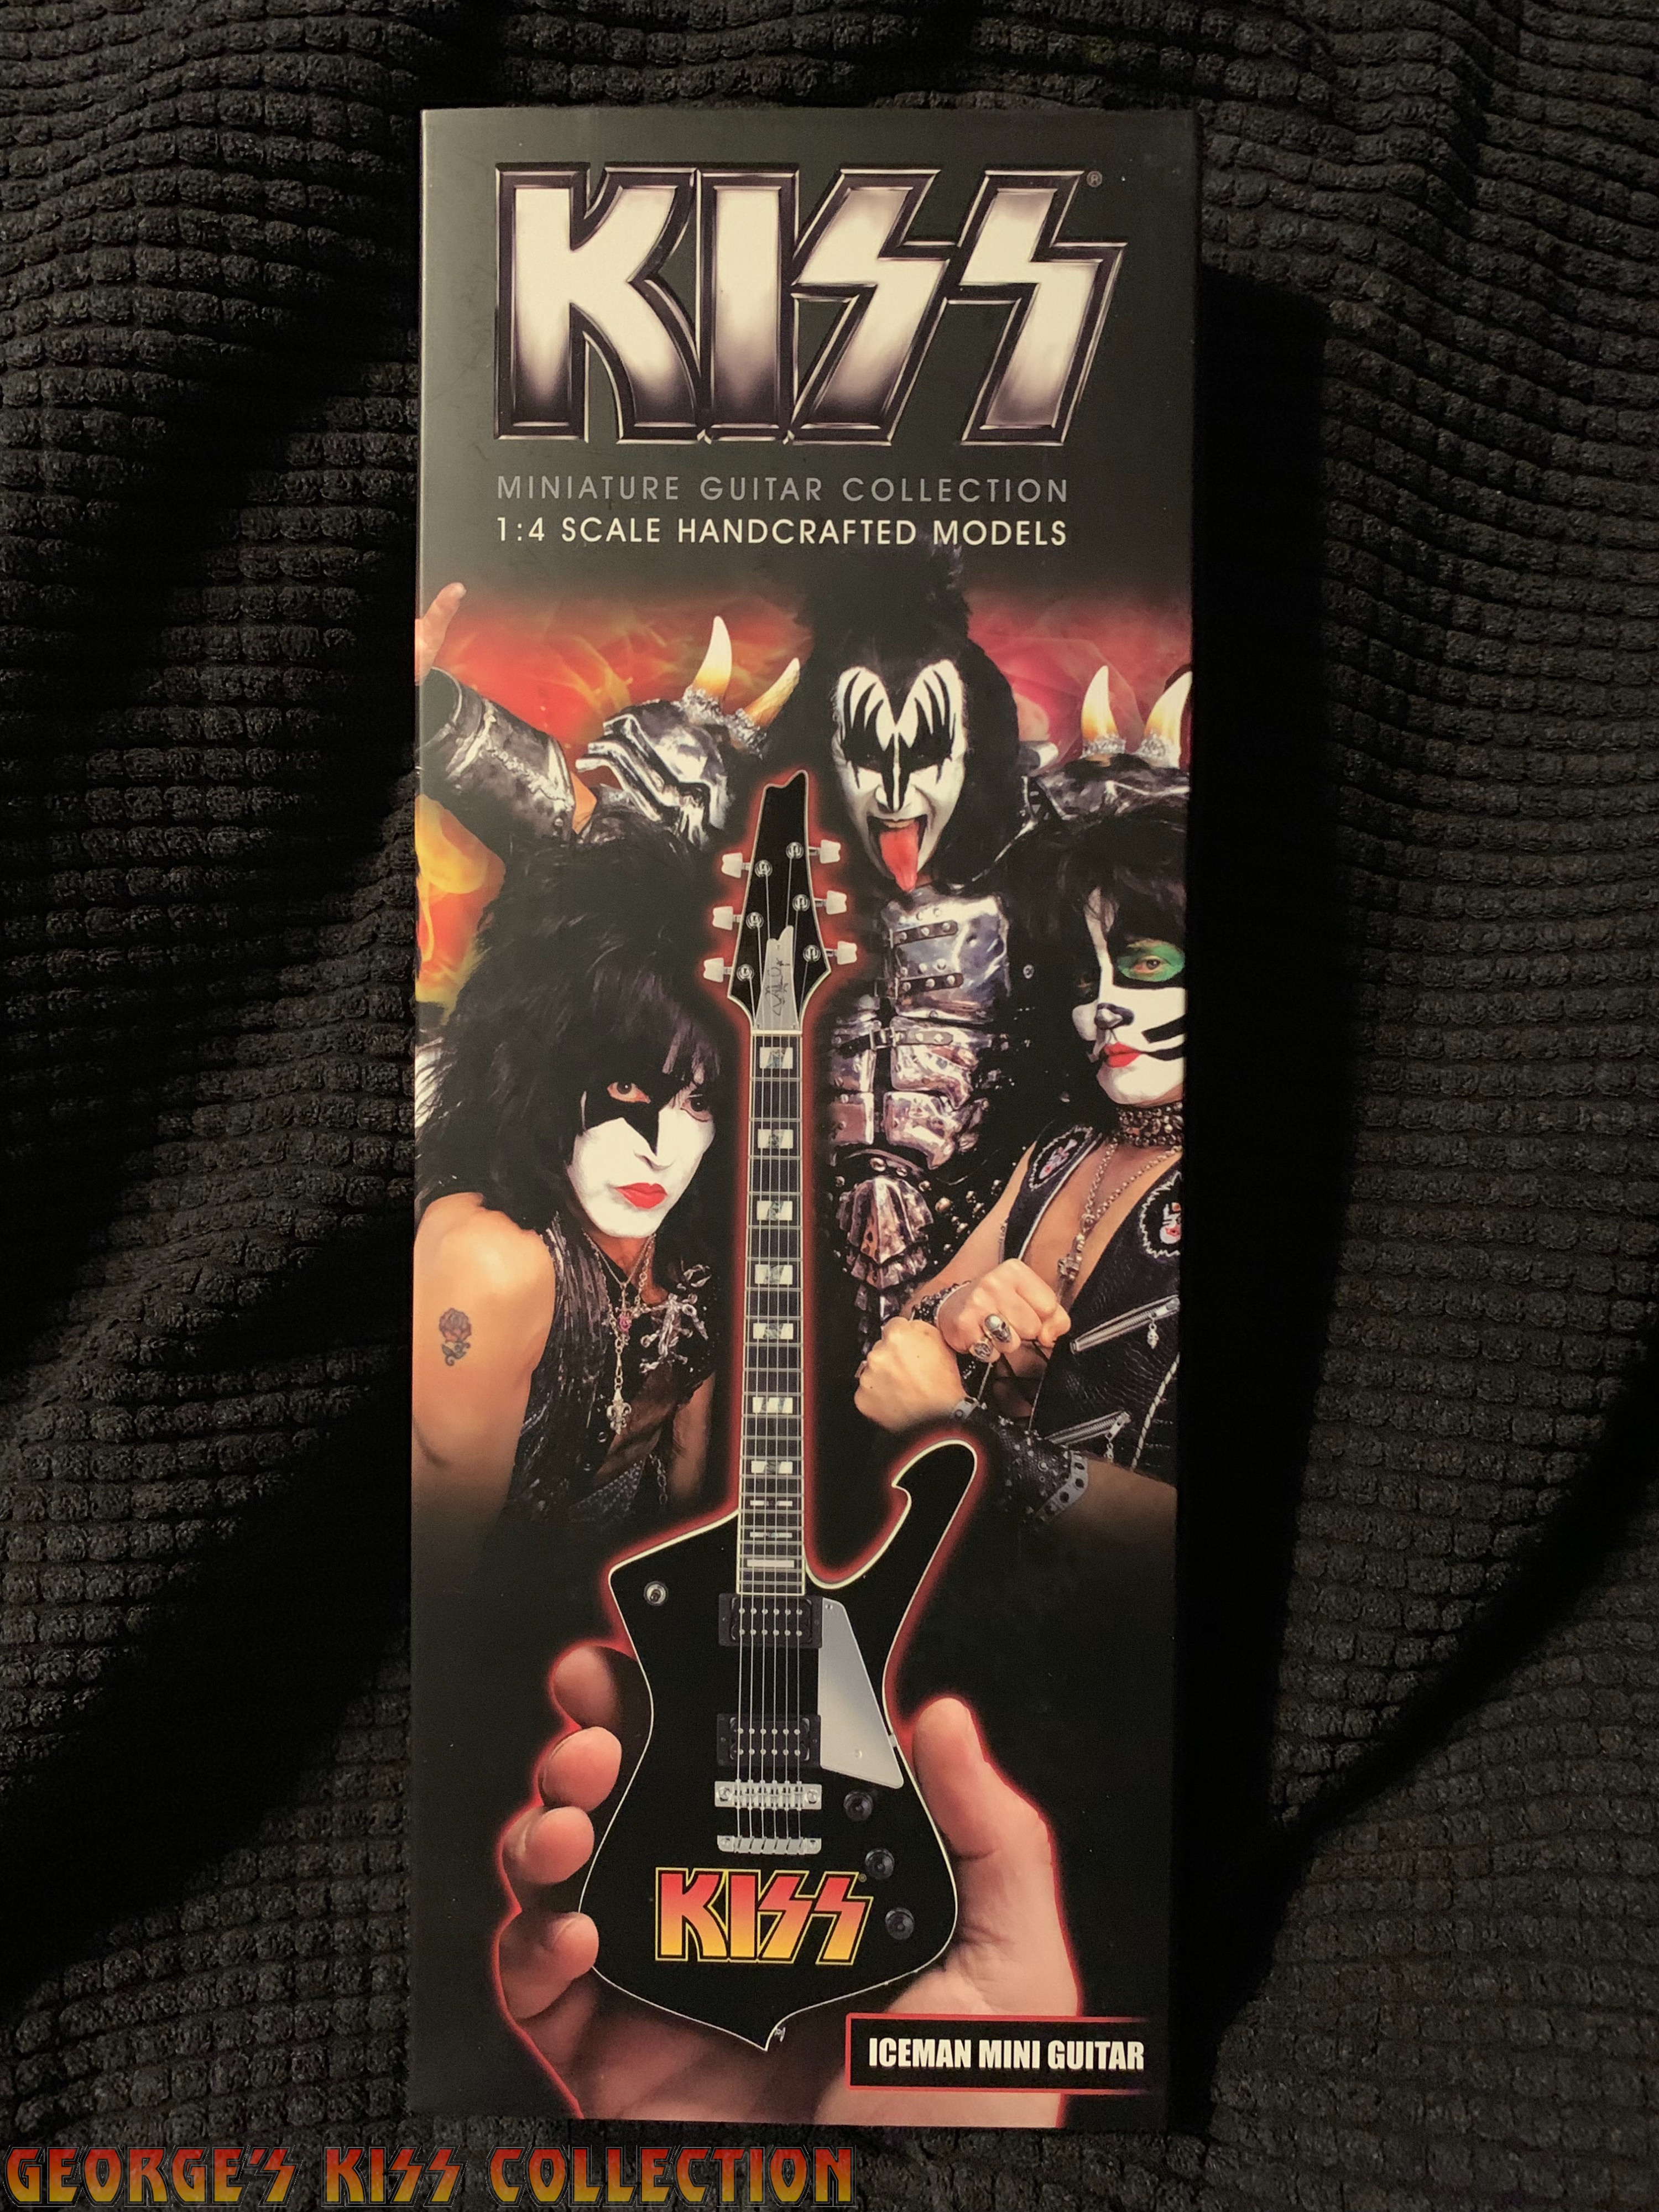 Carlino Guitars makes guitar straps for Paul Stanley of Kiss